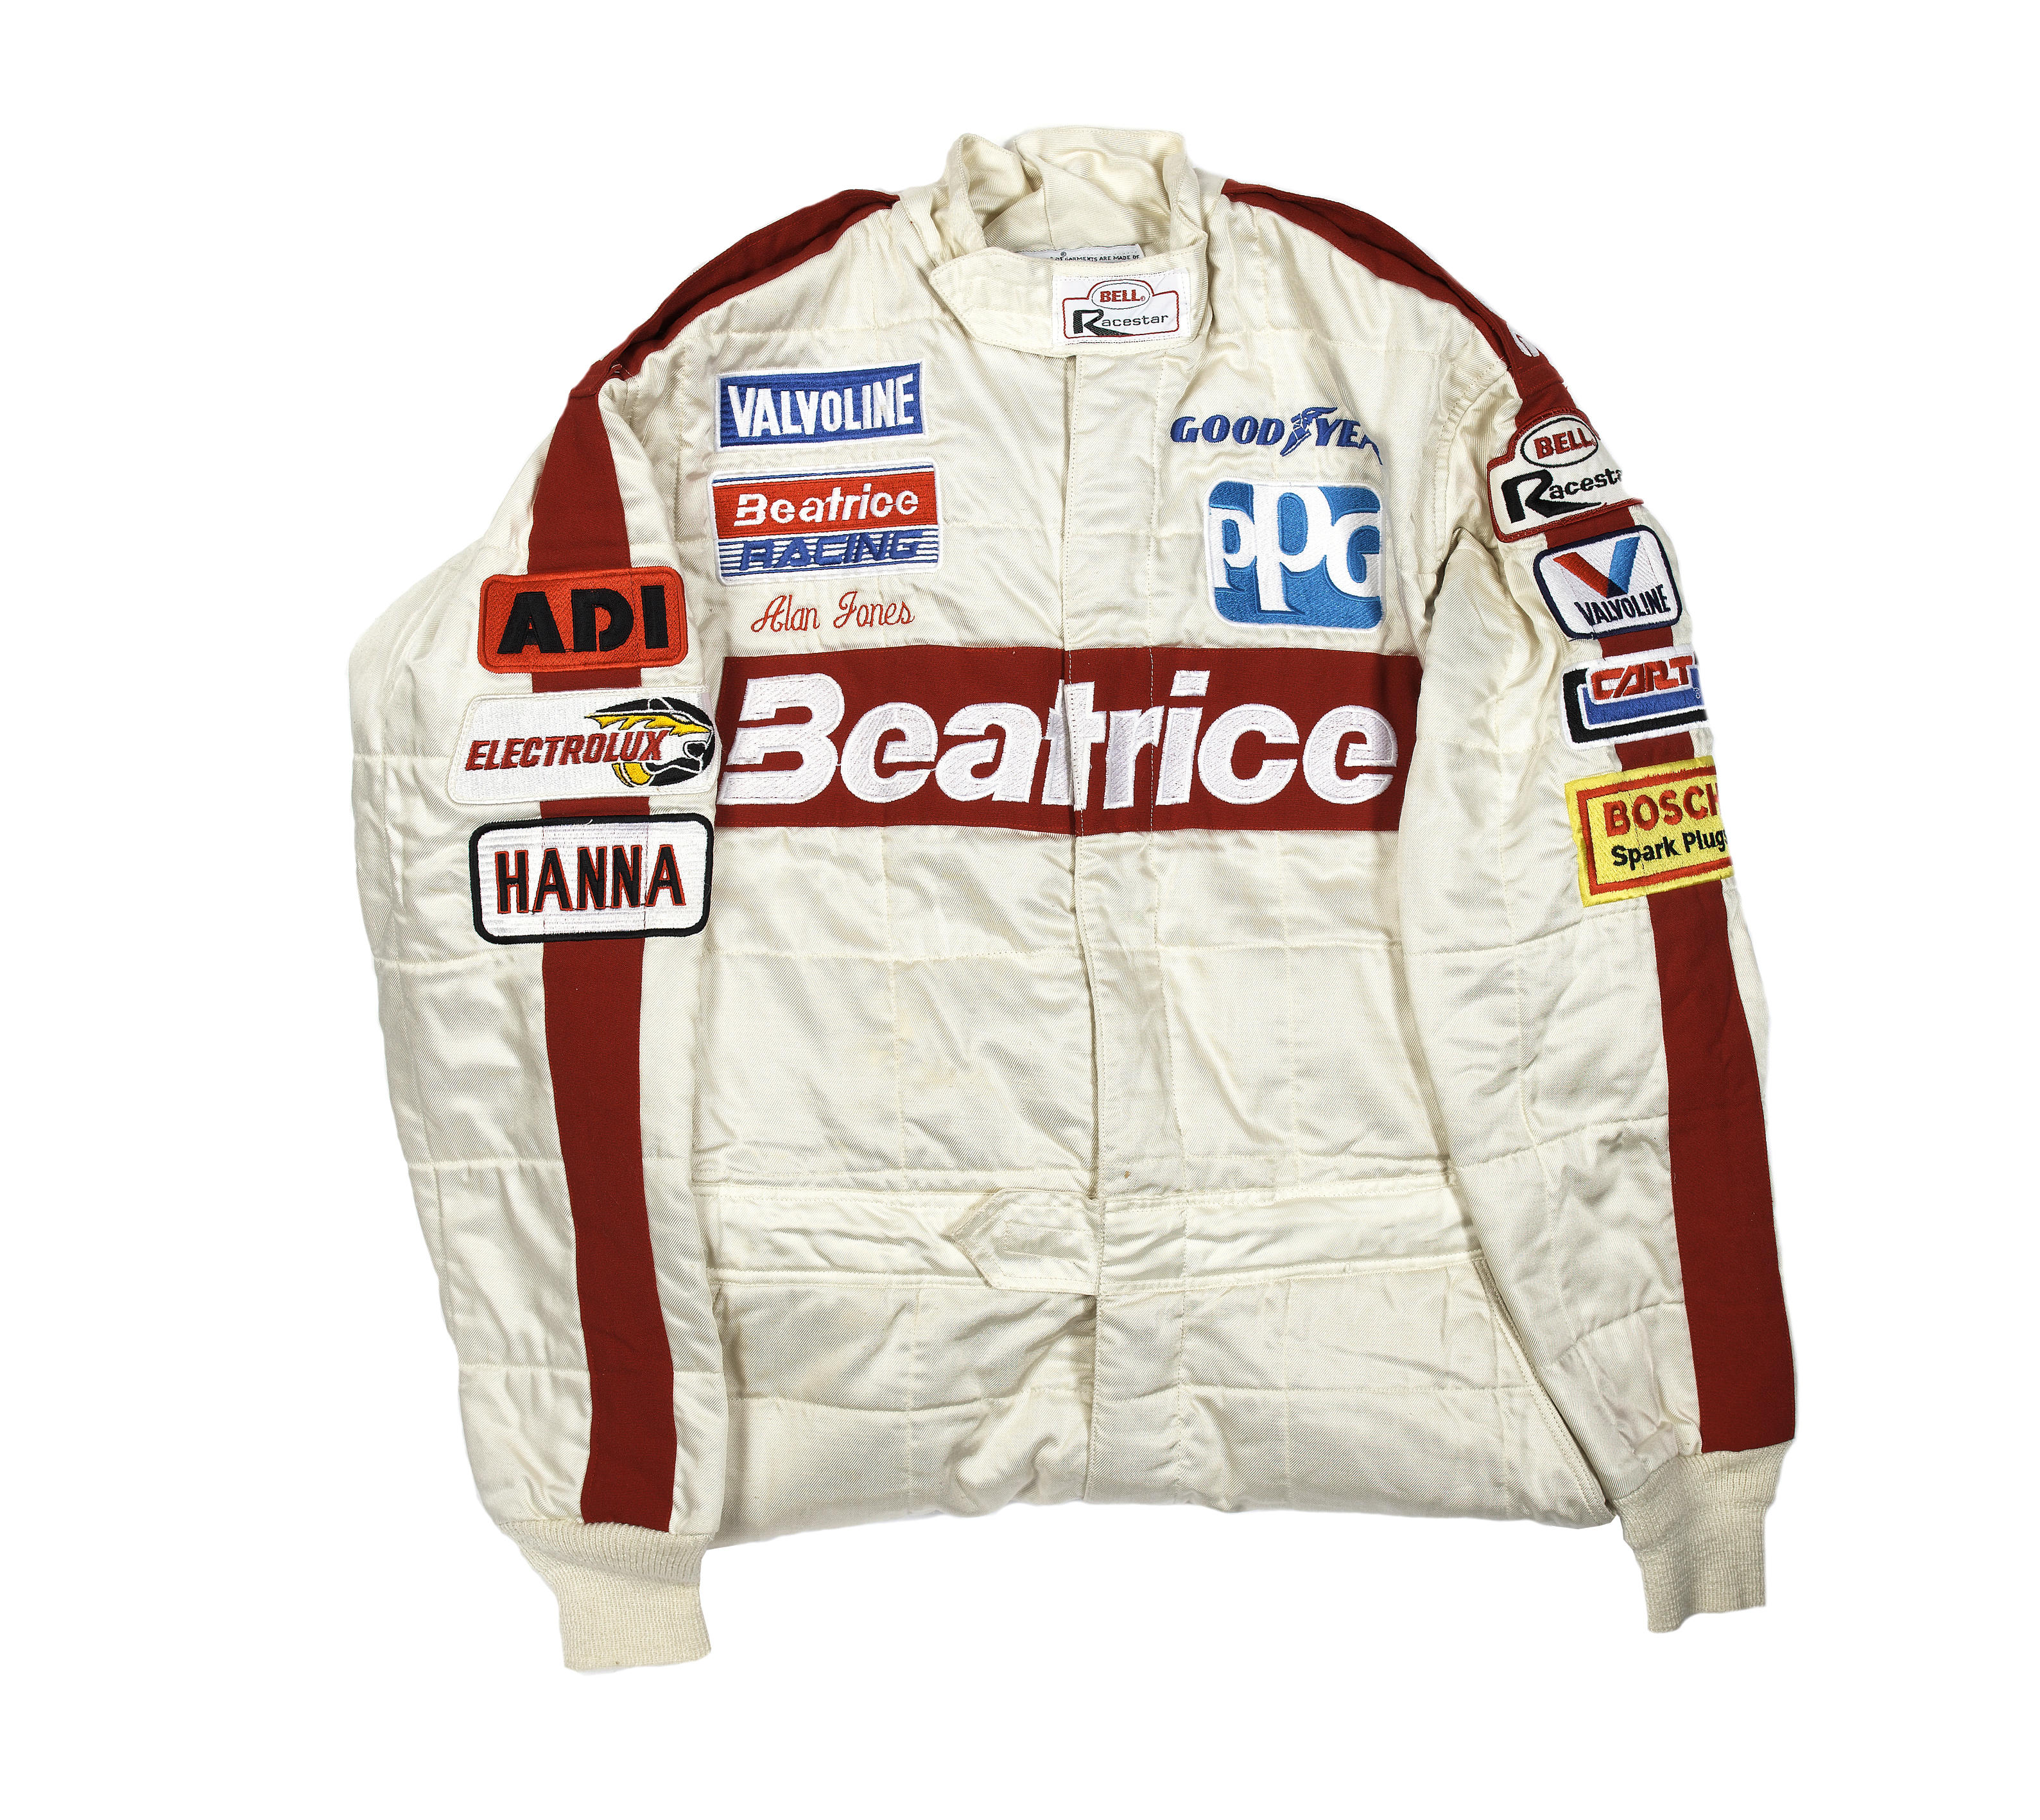 Bonhams Cars : An Alan Jones Beatrice Team race suit,